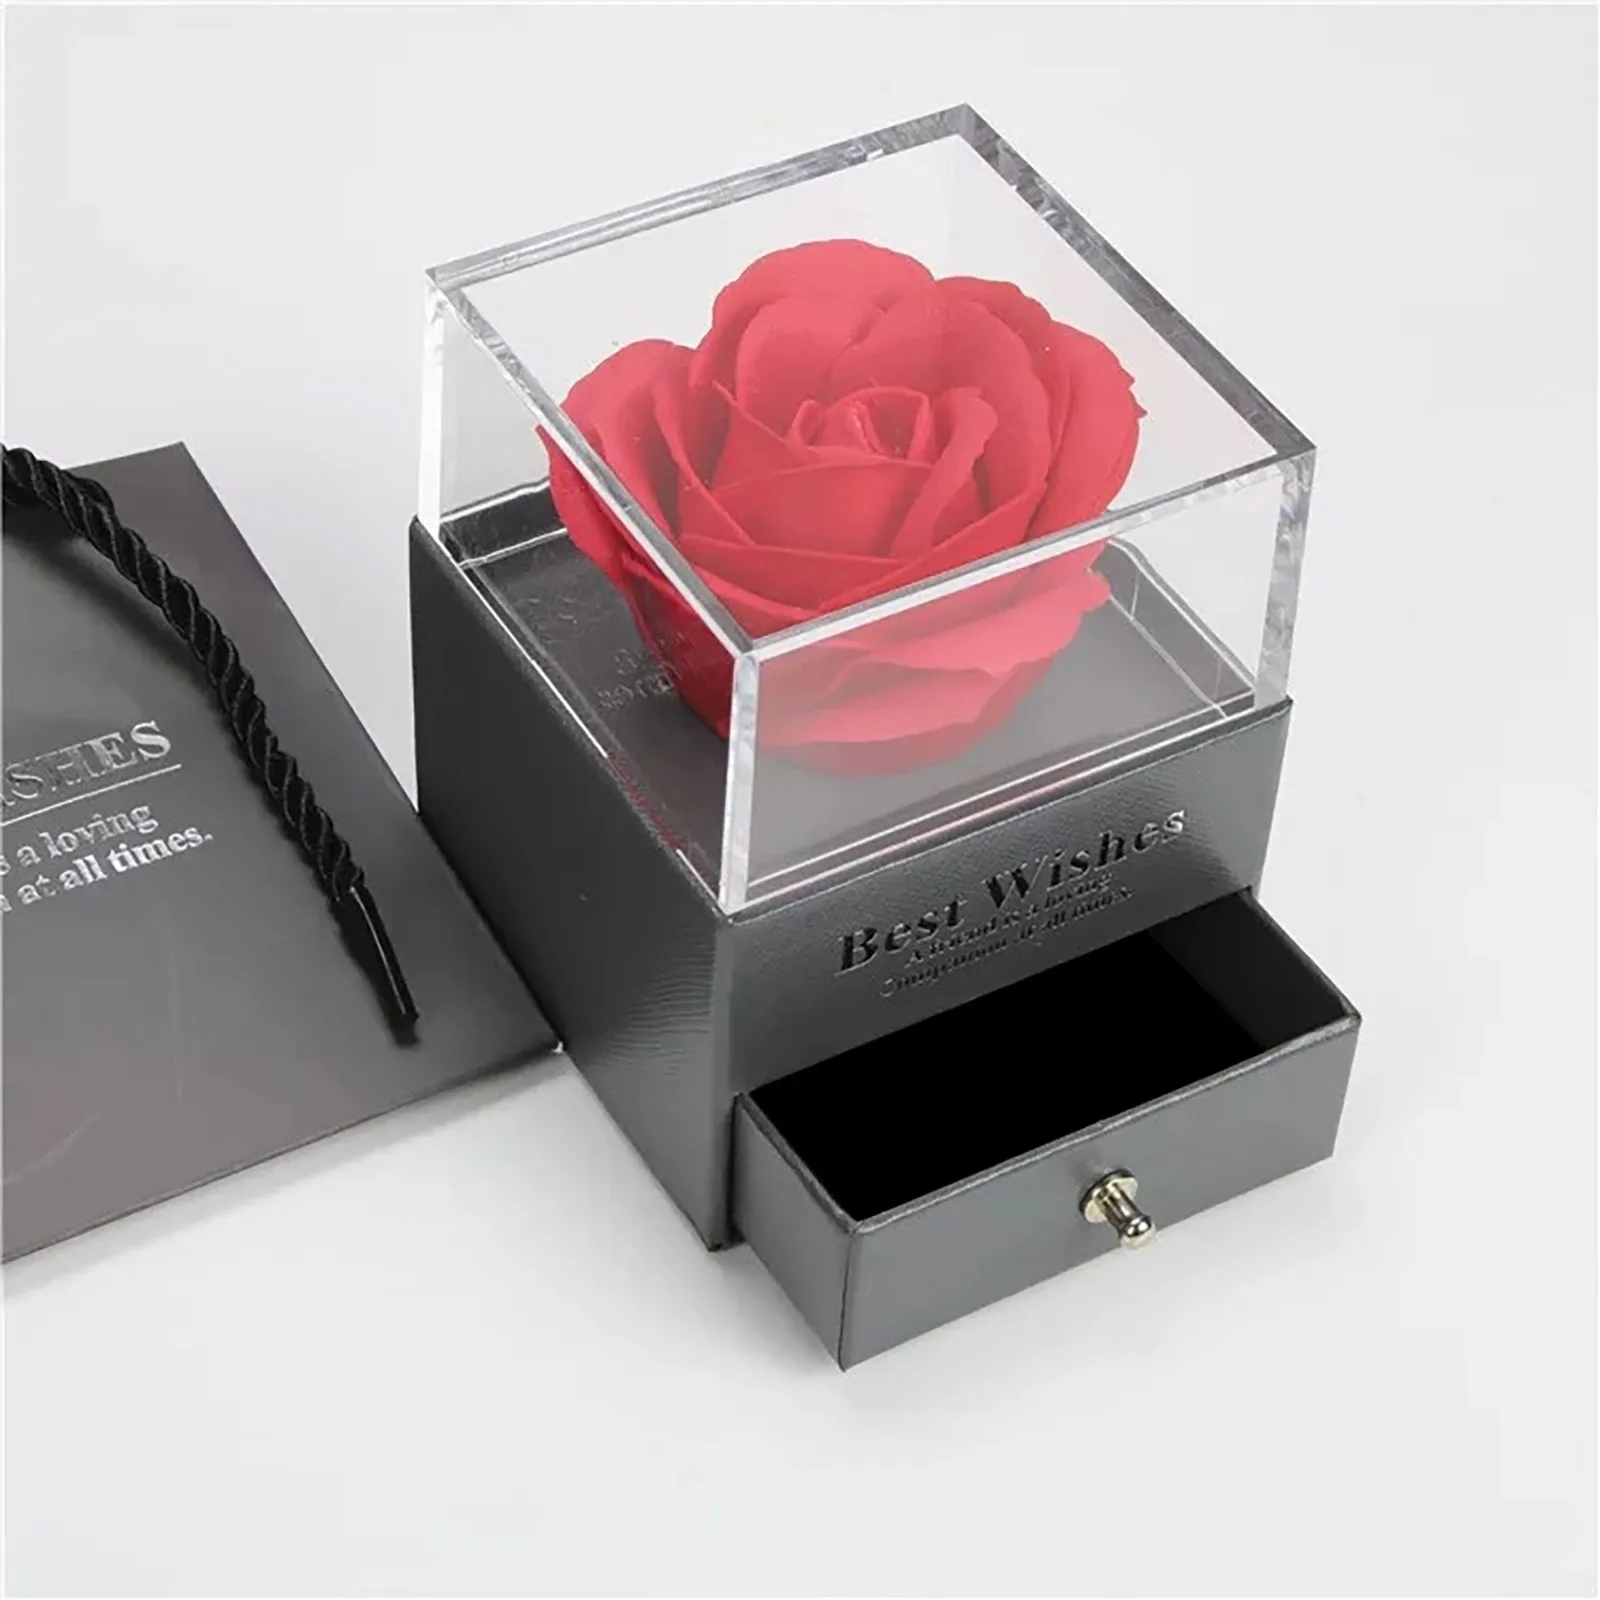 Scadbea7b10374673bd329cbe290b74943 Everlasting Flower Gift Box Rose Preservation Box Mother's Day Handmade Rose Gif